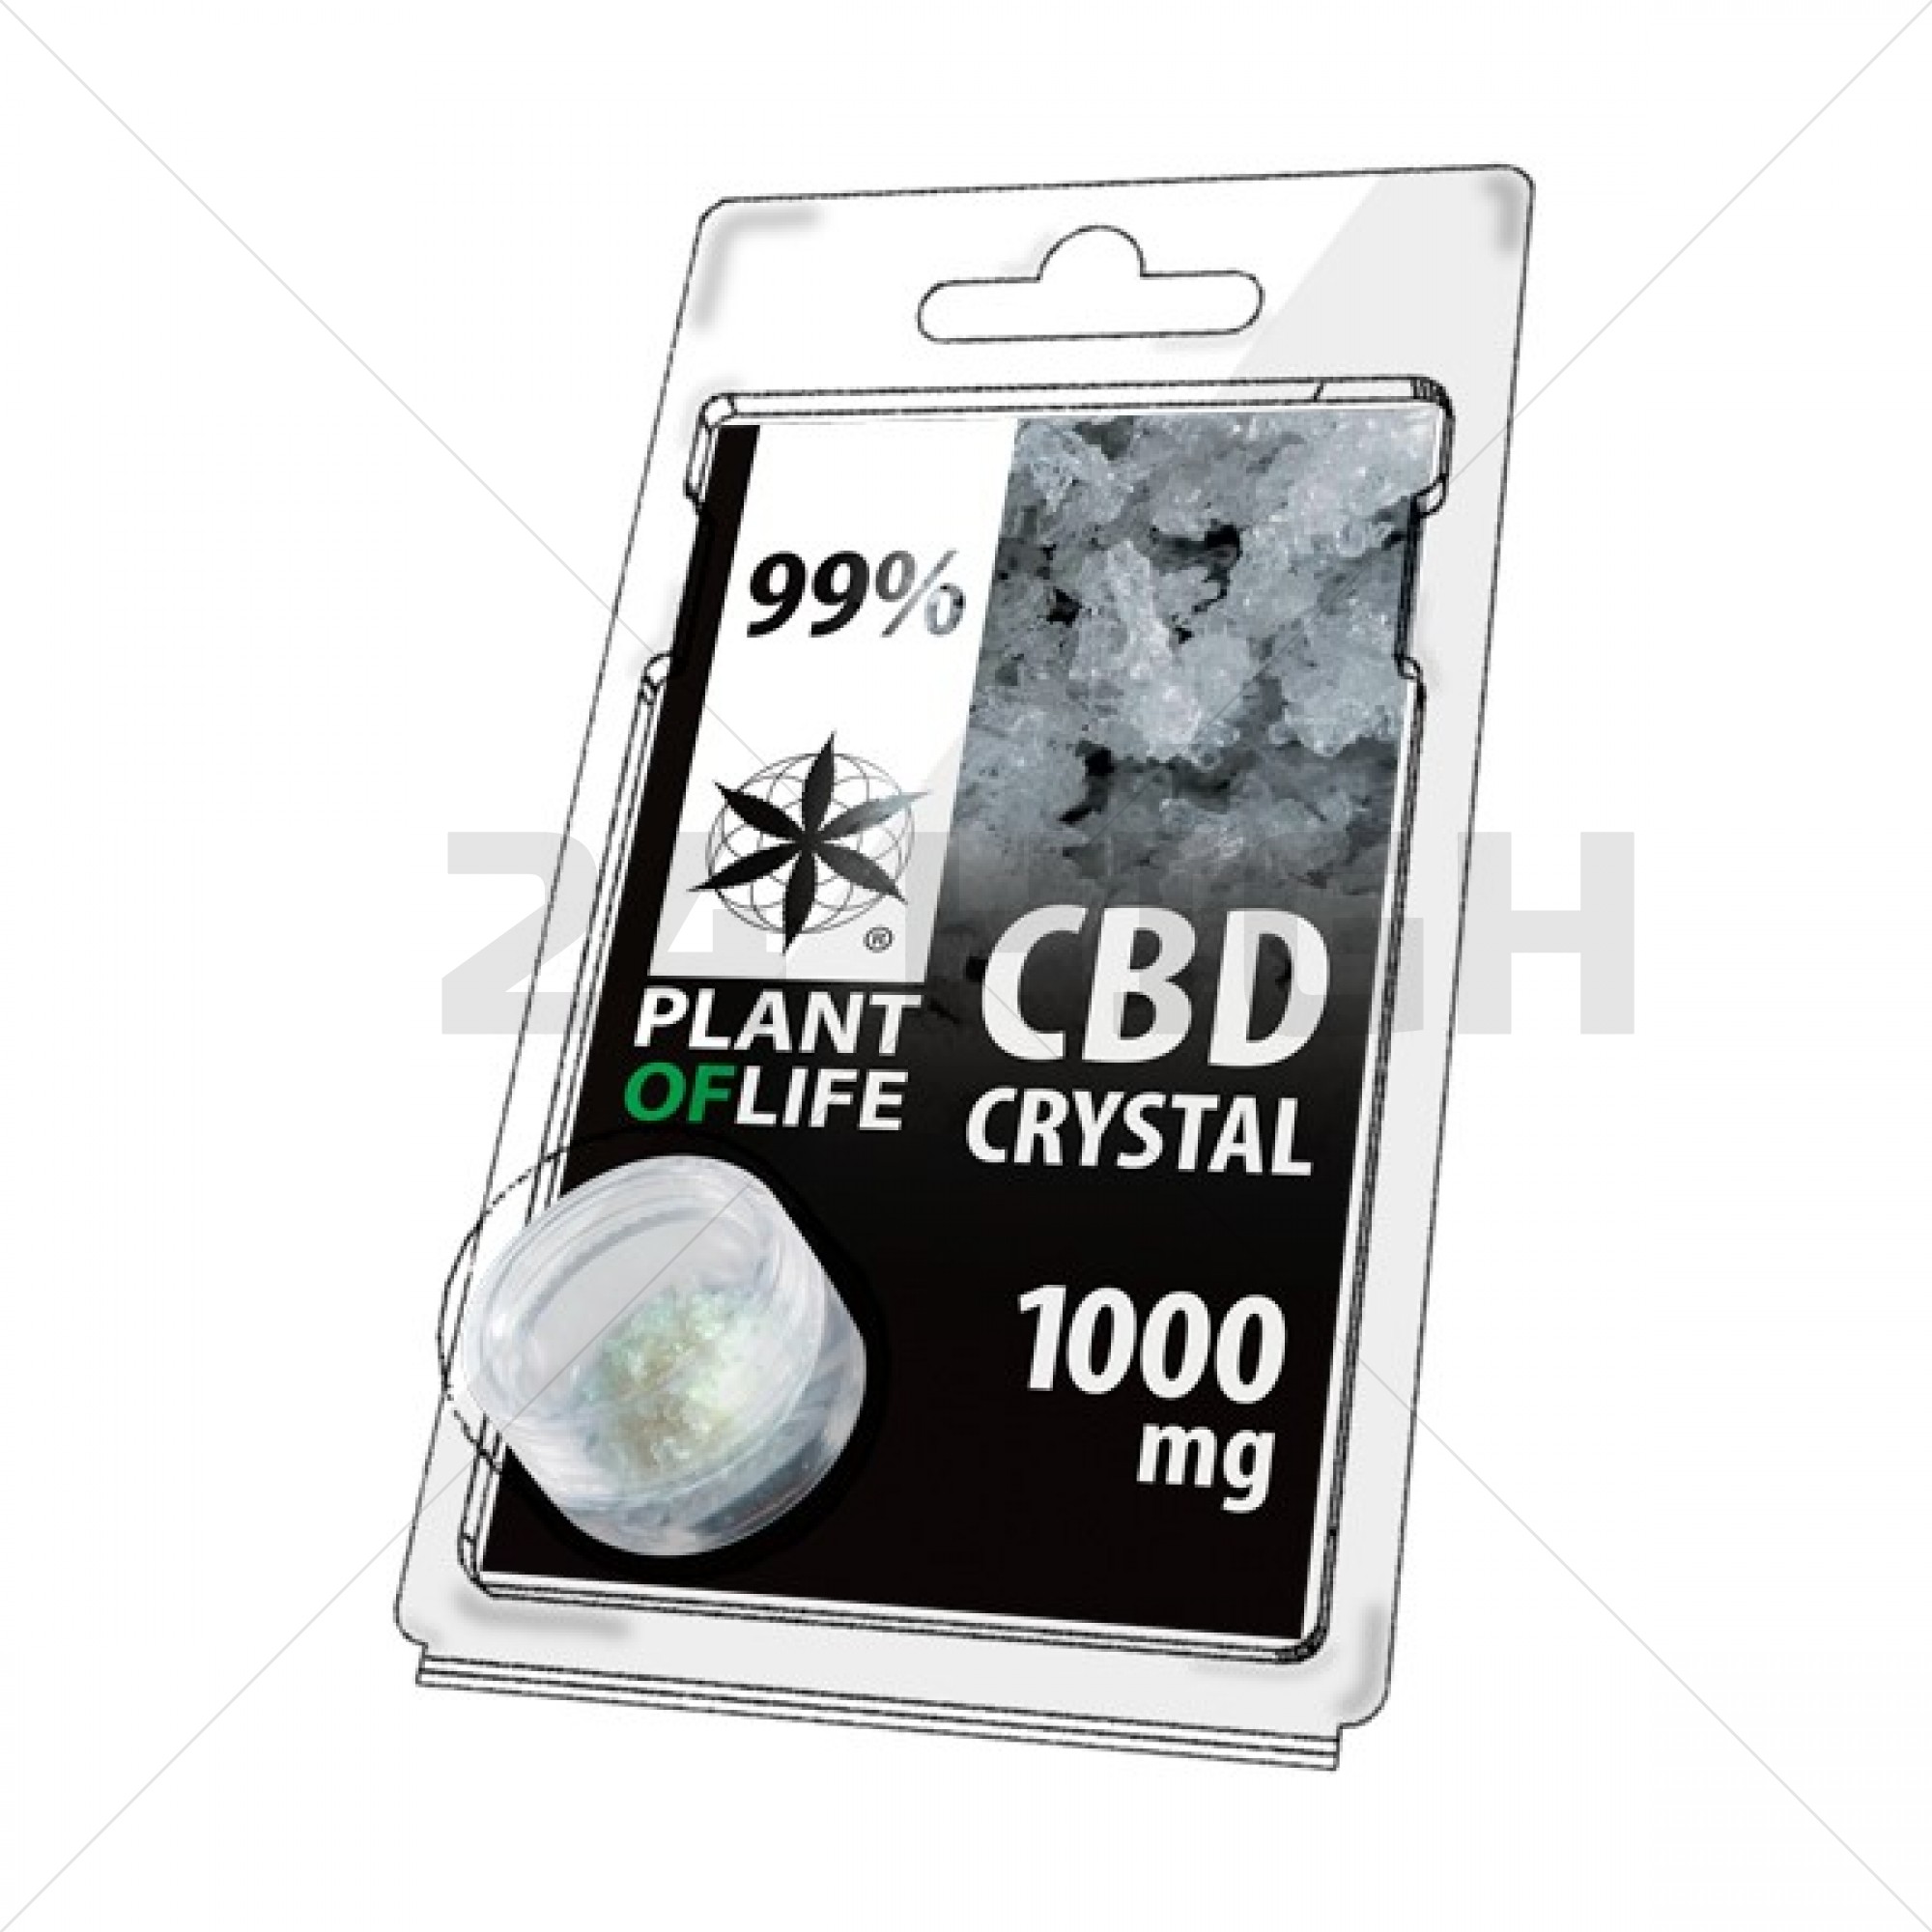 CBD Cristales 1000mg Plant Of Life